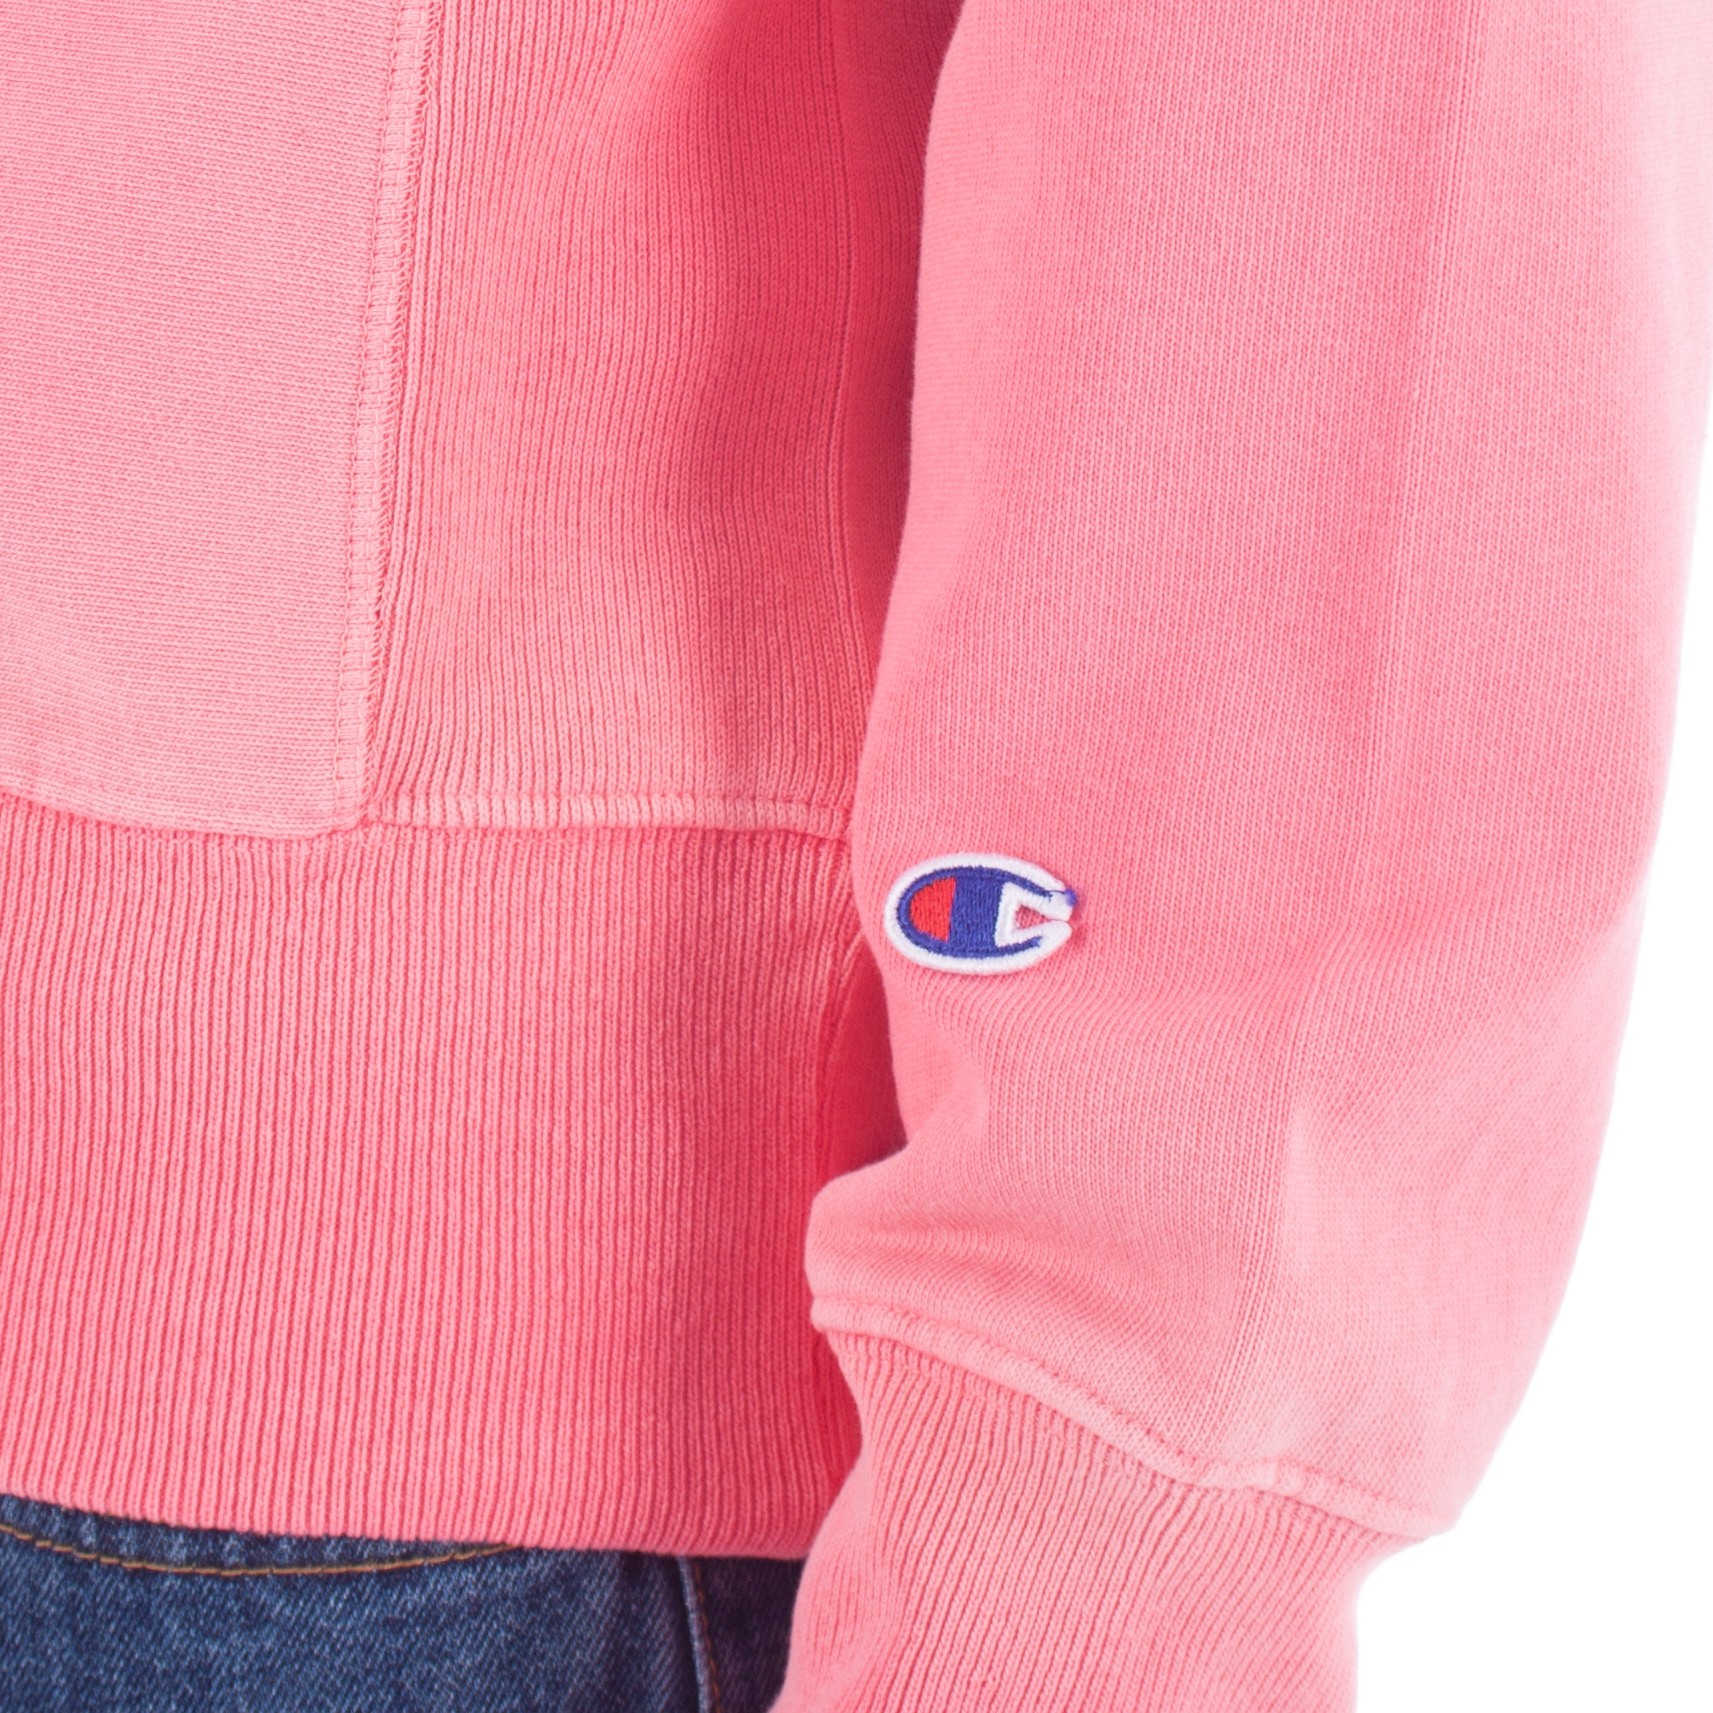 Champion Reverse Weave Crew Neck Sweatshirt (Pink) - Consortium.